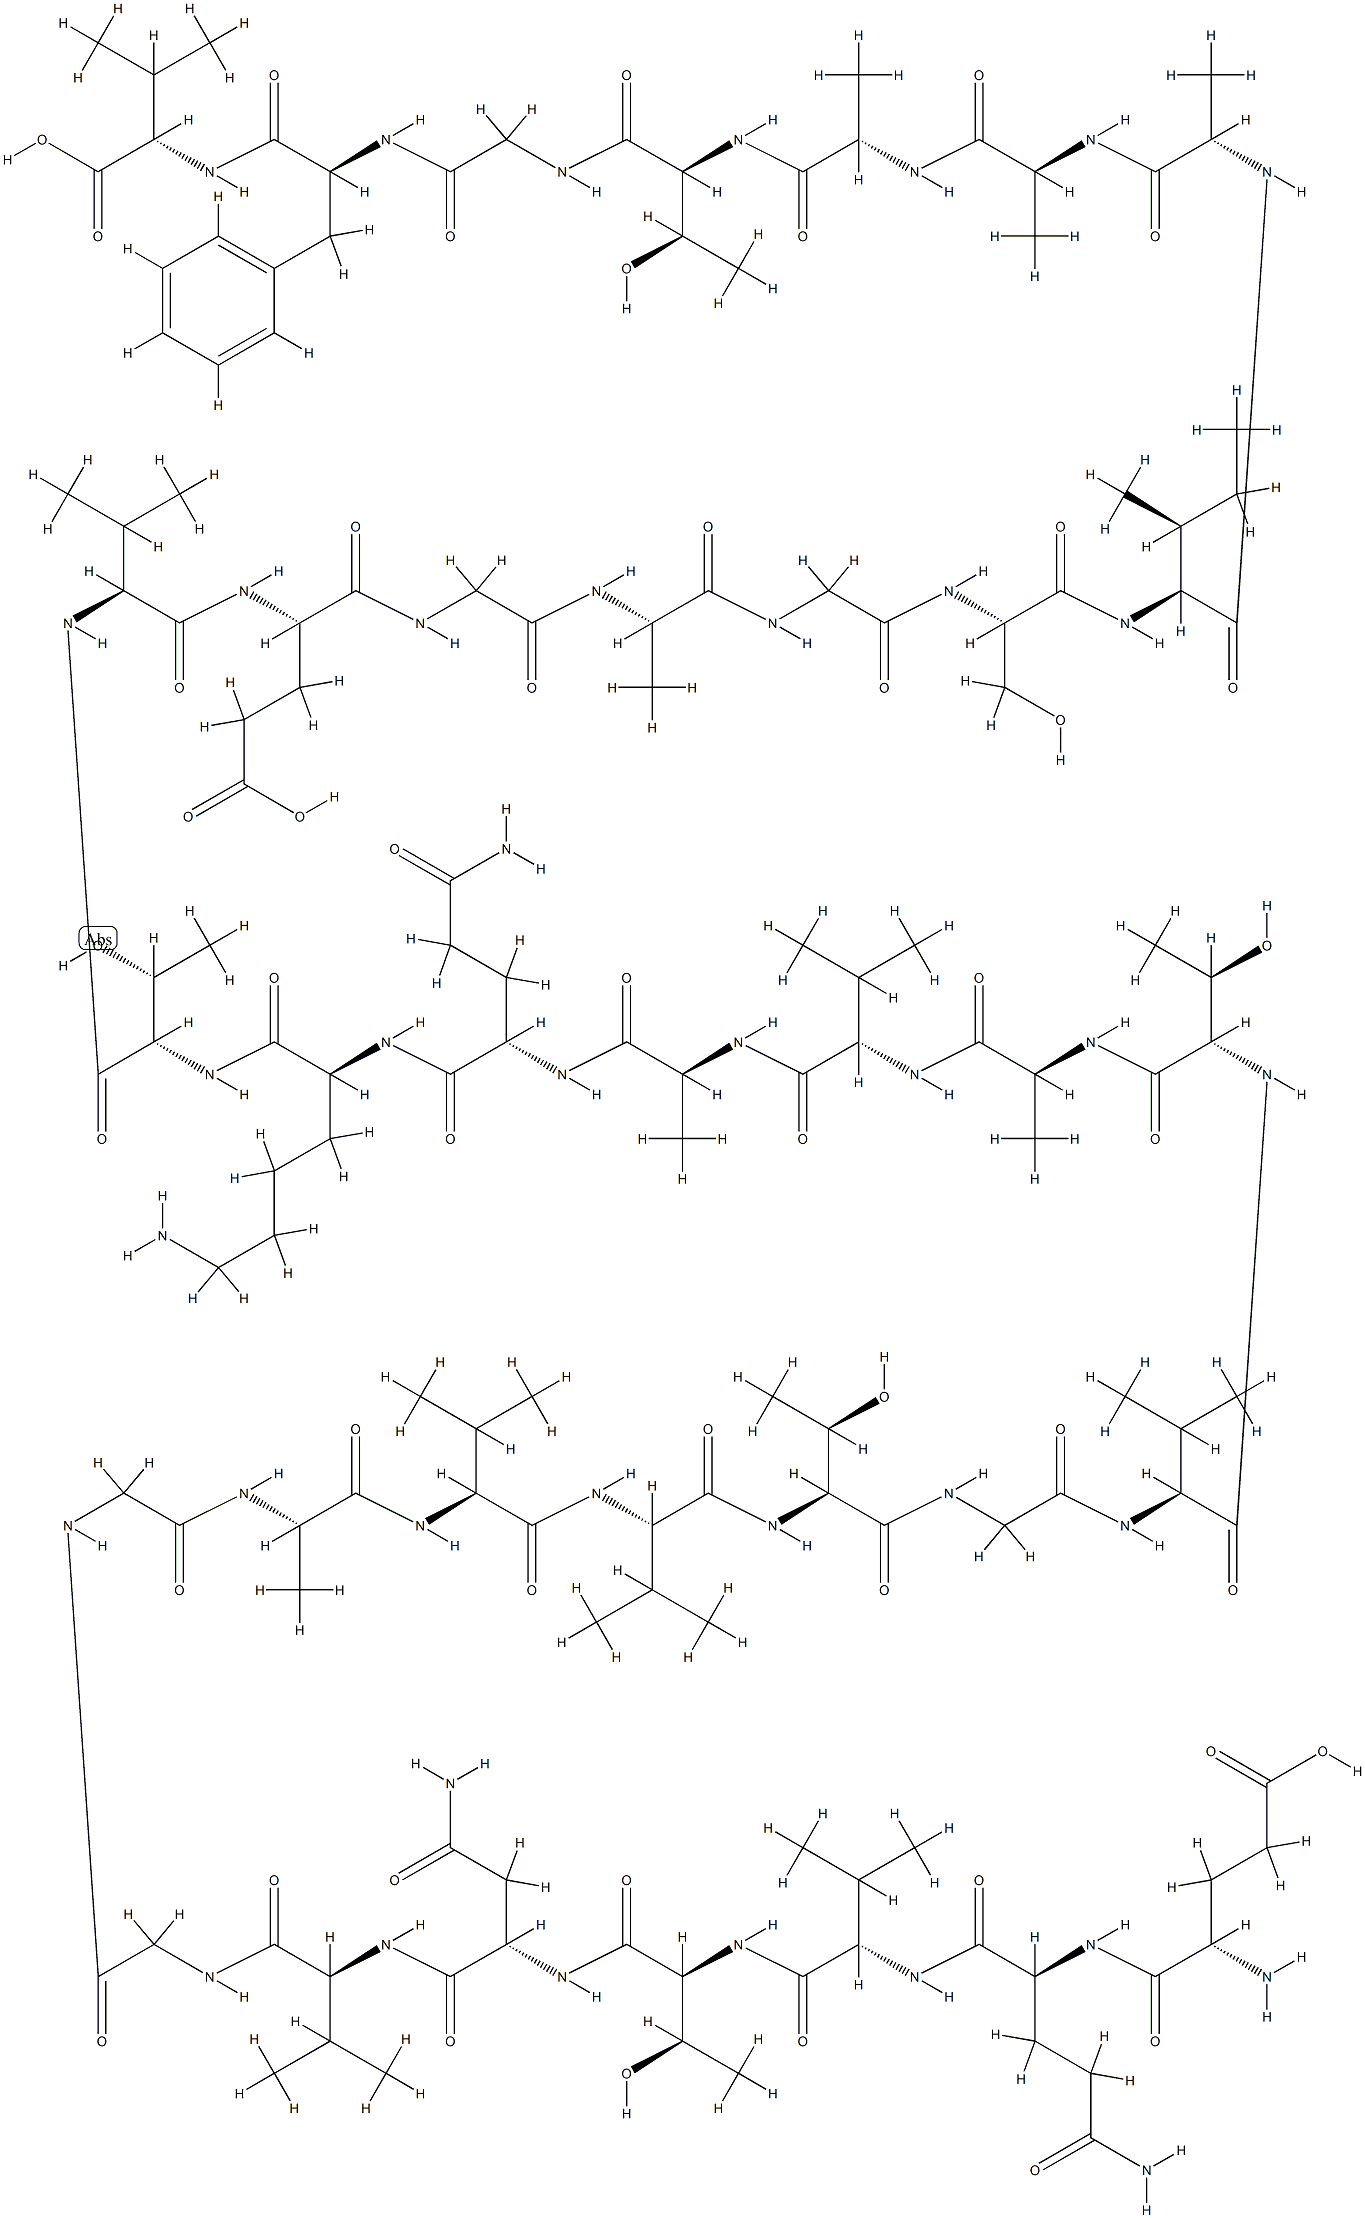 NAC|α-Synuclein (61-95) (human)